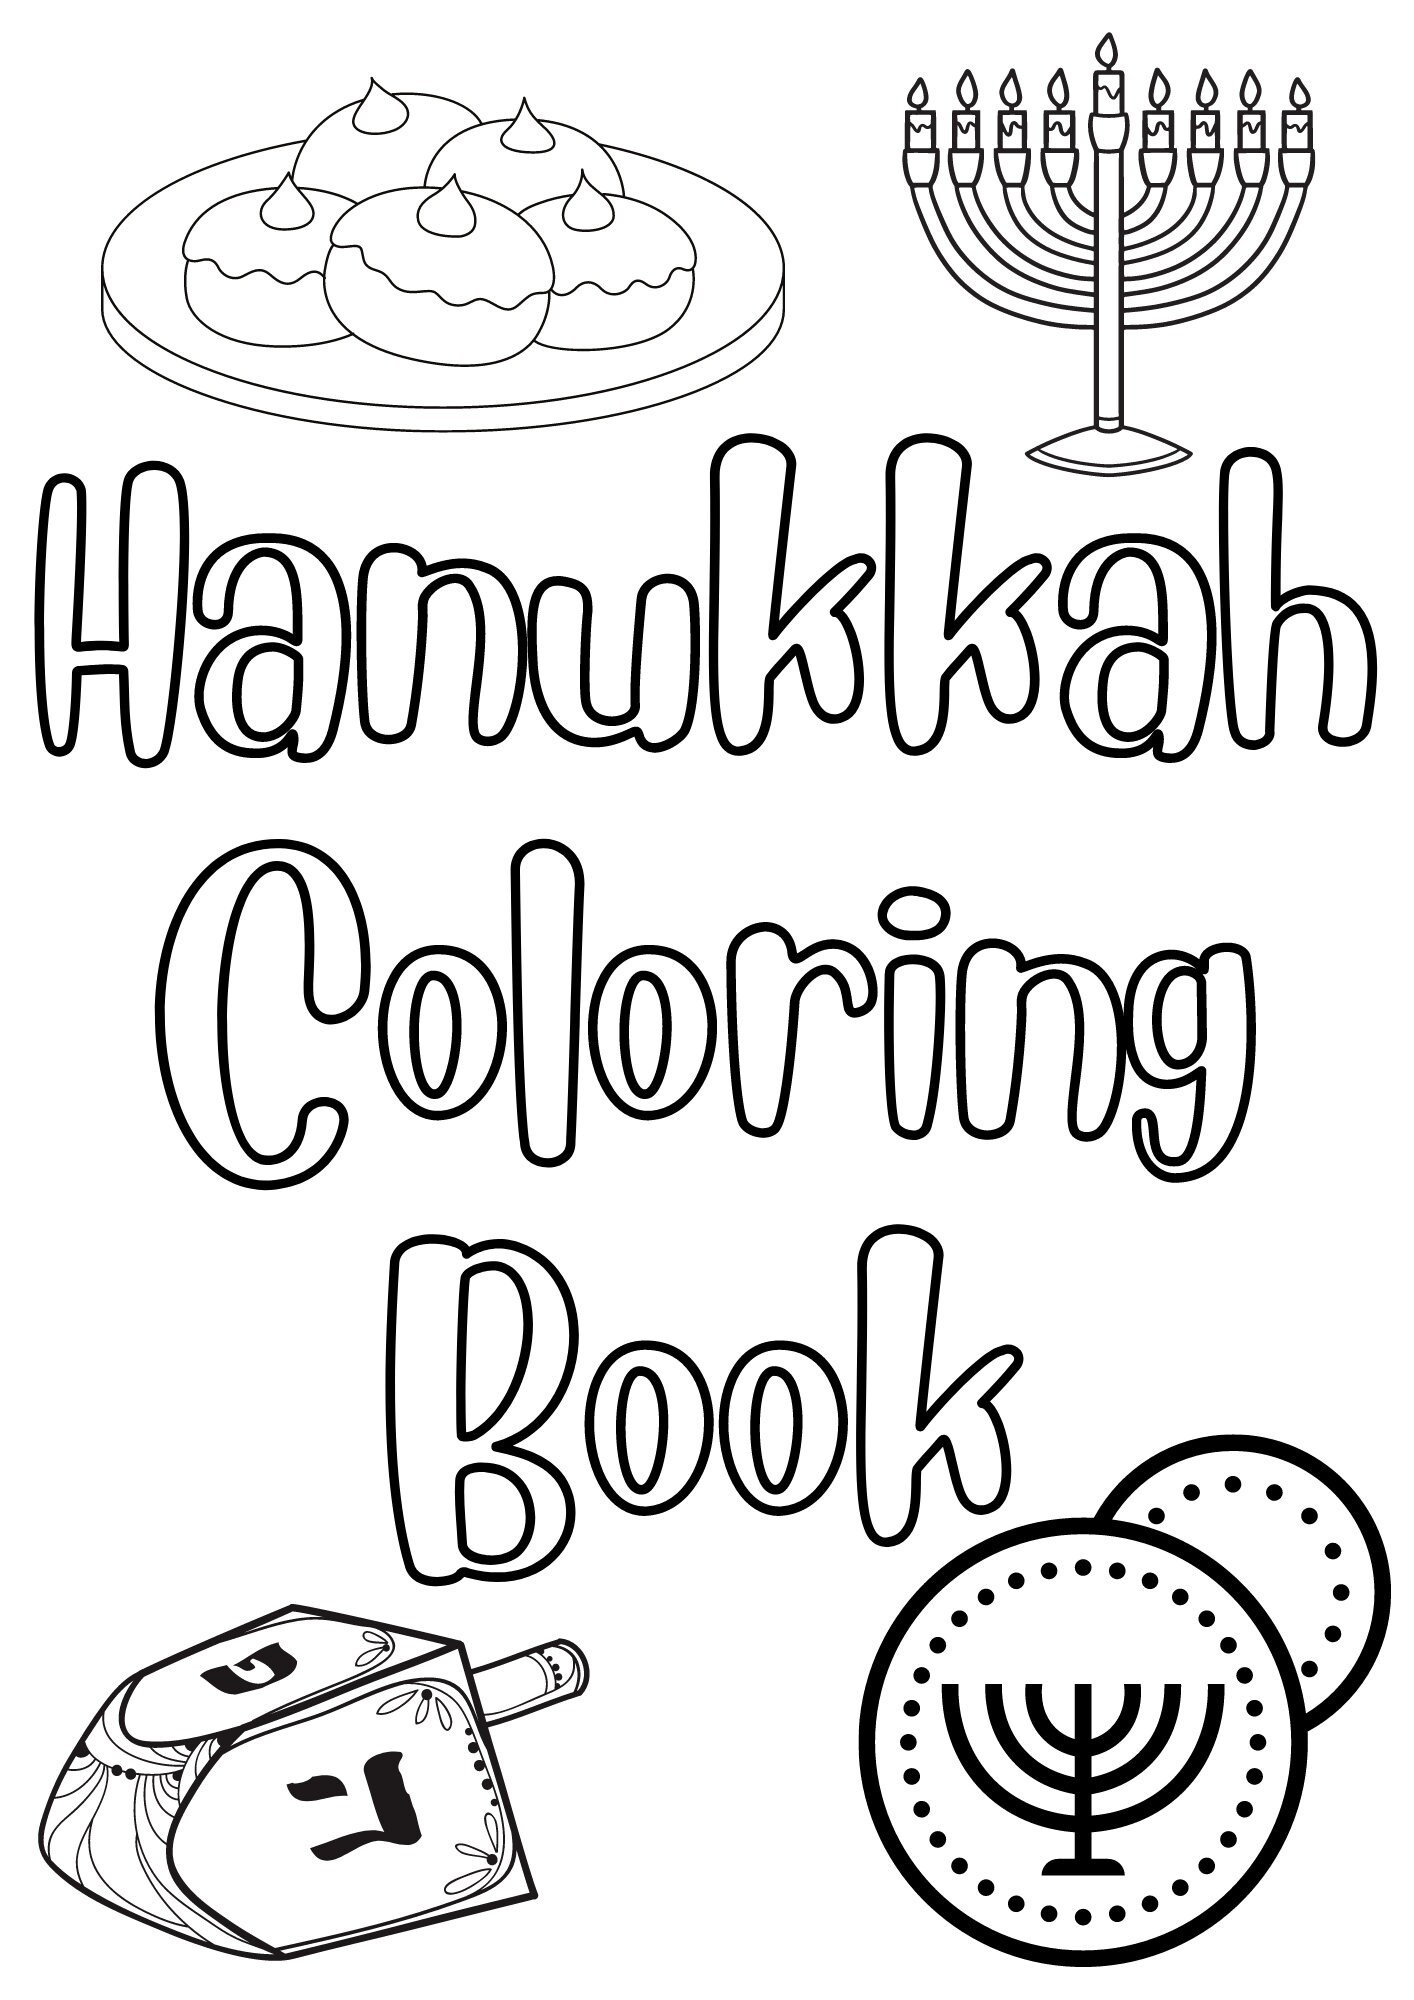 Hanukkah coloring book printable pages for kids menorah dreidel latkes gelt jewish homeschool resource fun educational holiday activity instant download